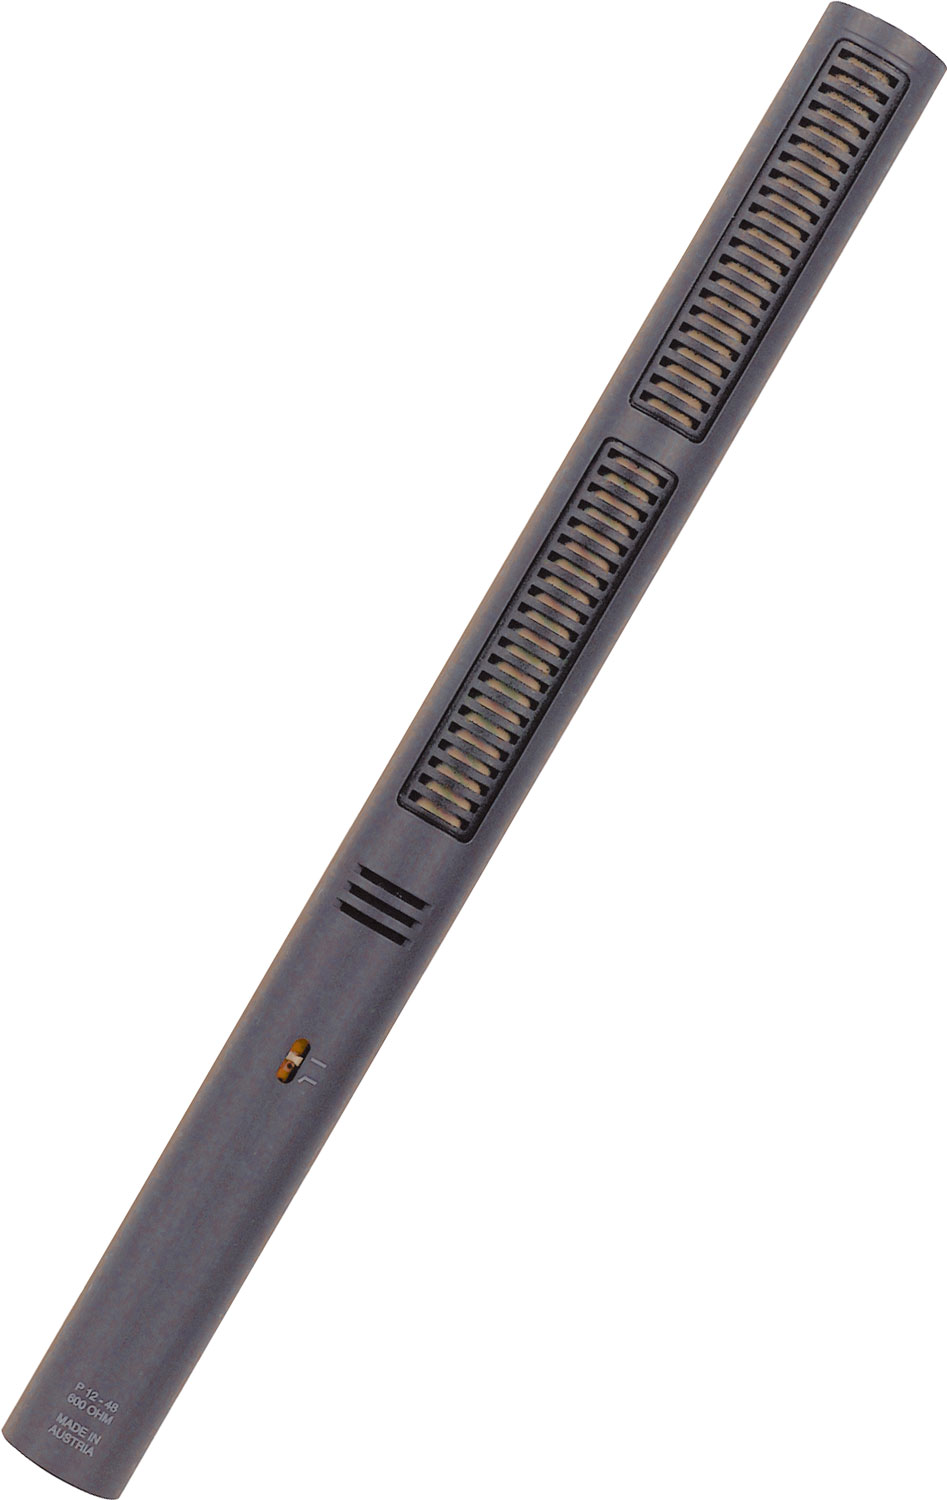 C568B микрофон конденсаторный "компактная пушка", гиперкардиоида AKG